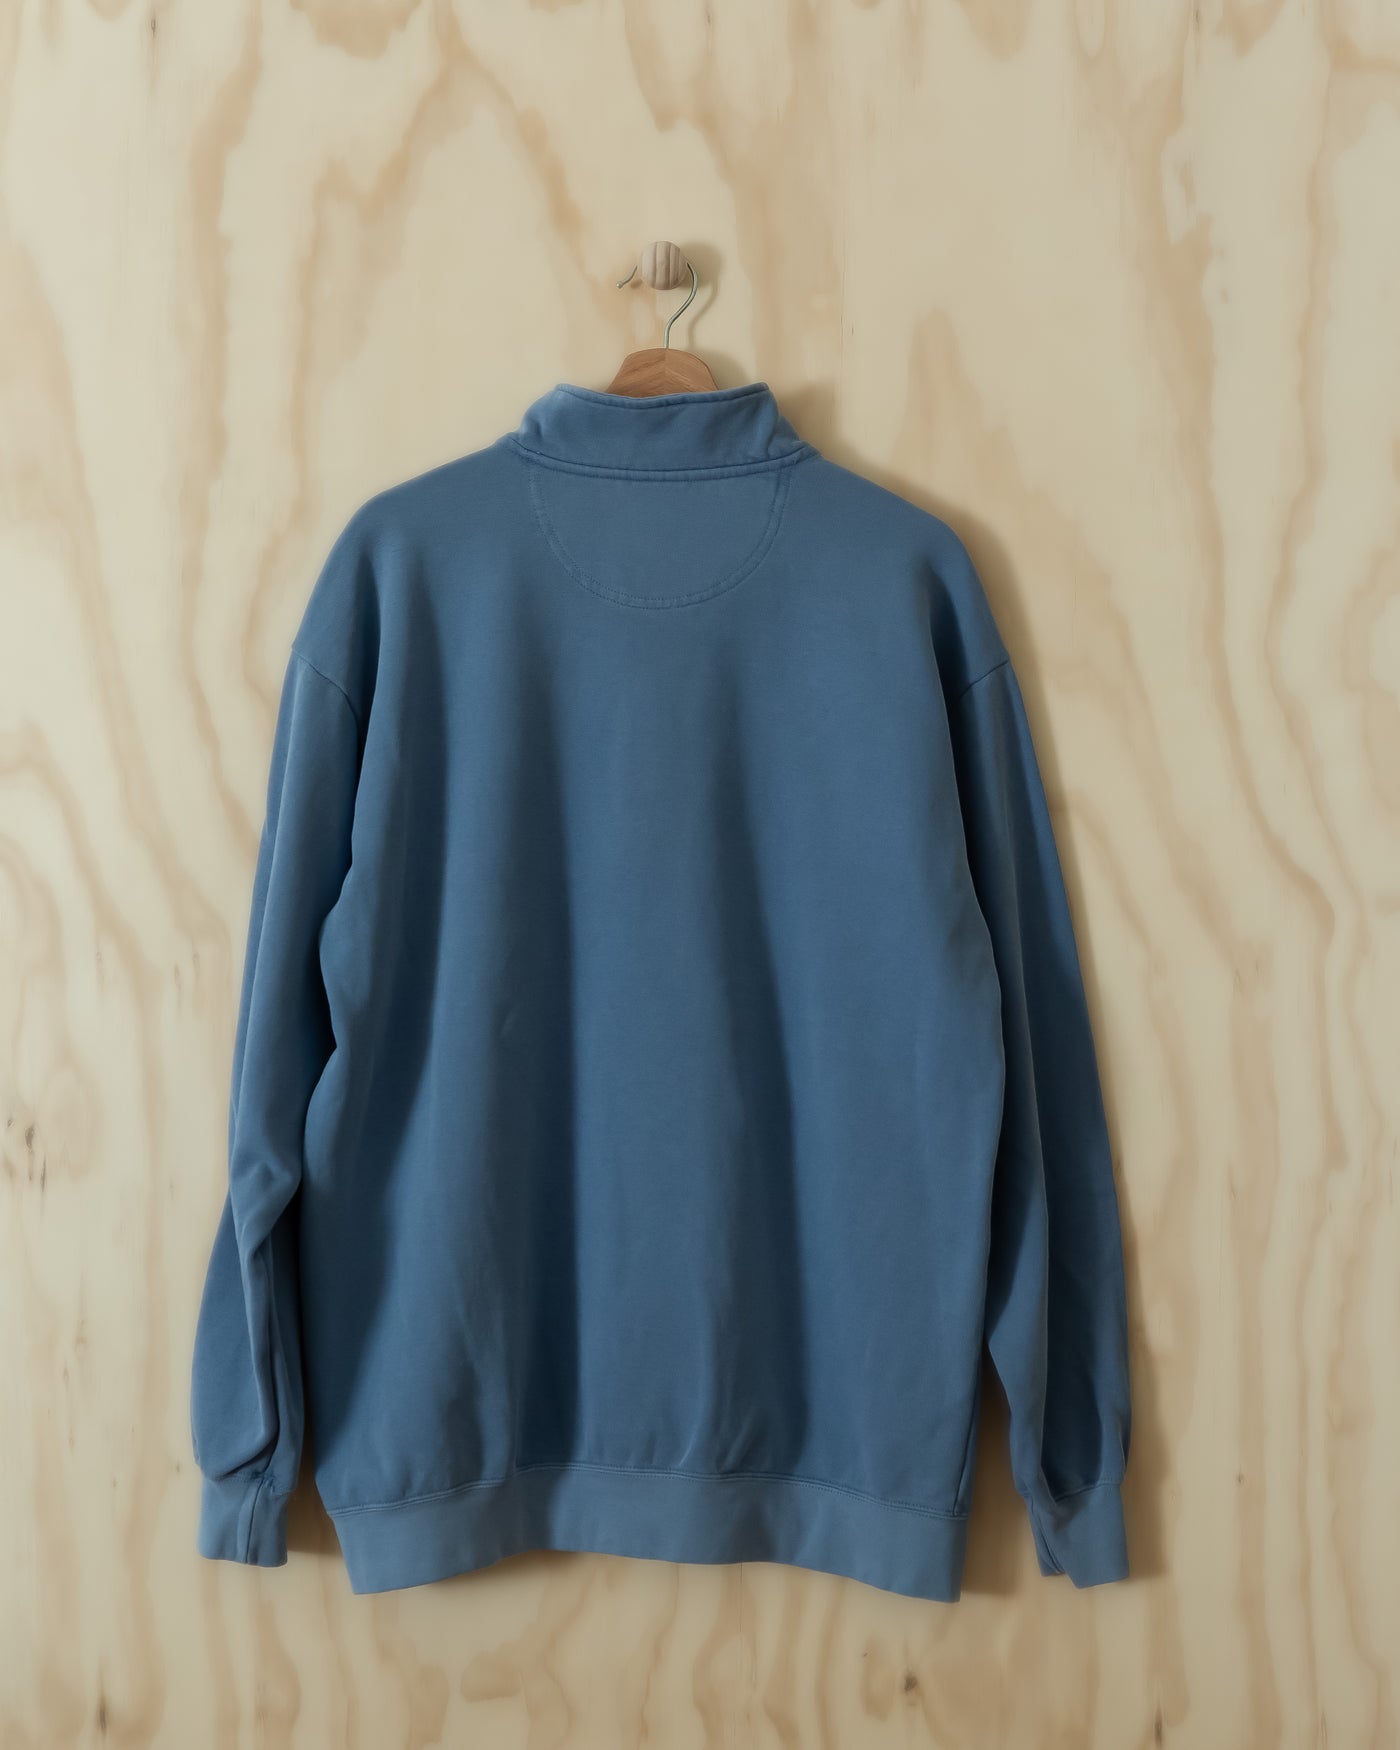 vintage 1/4 zip retro unisex sweater // blue jean